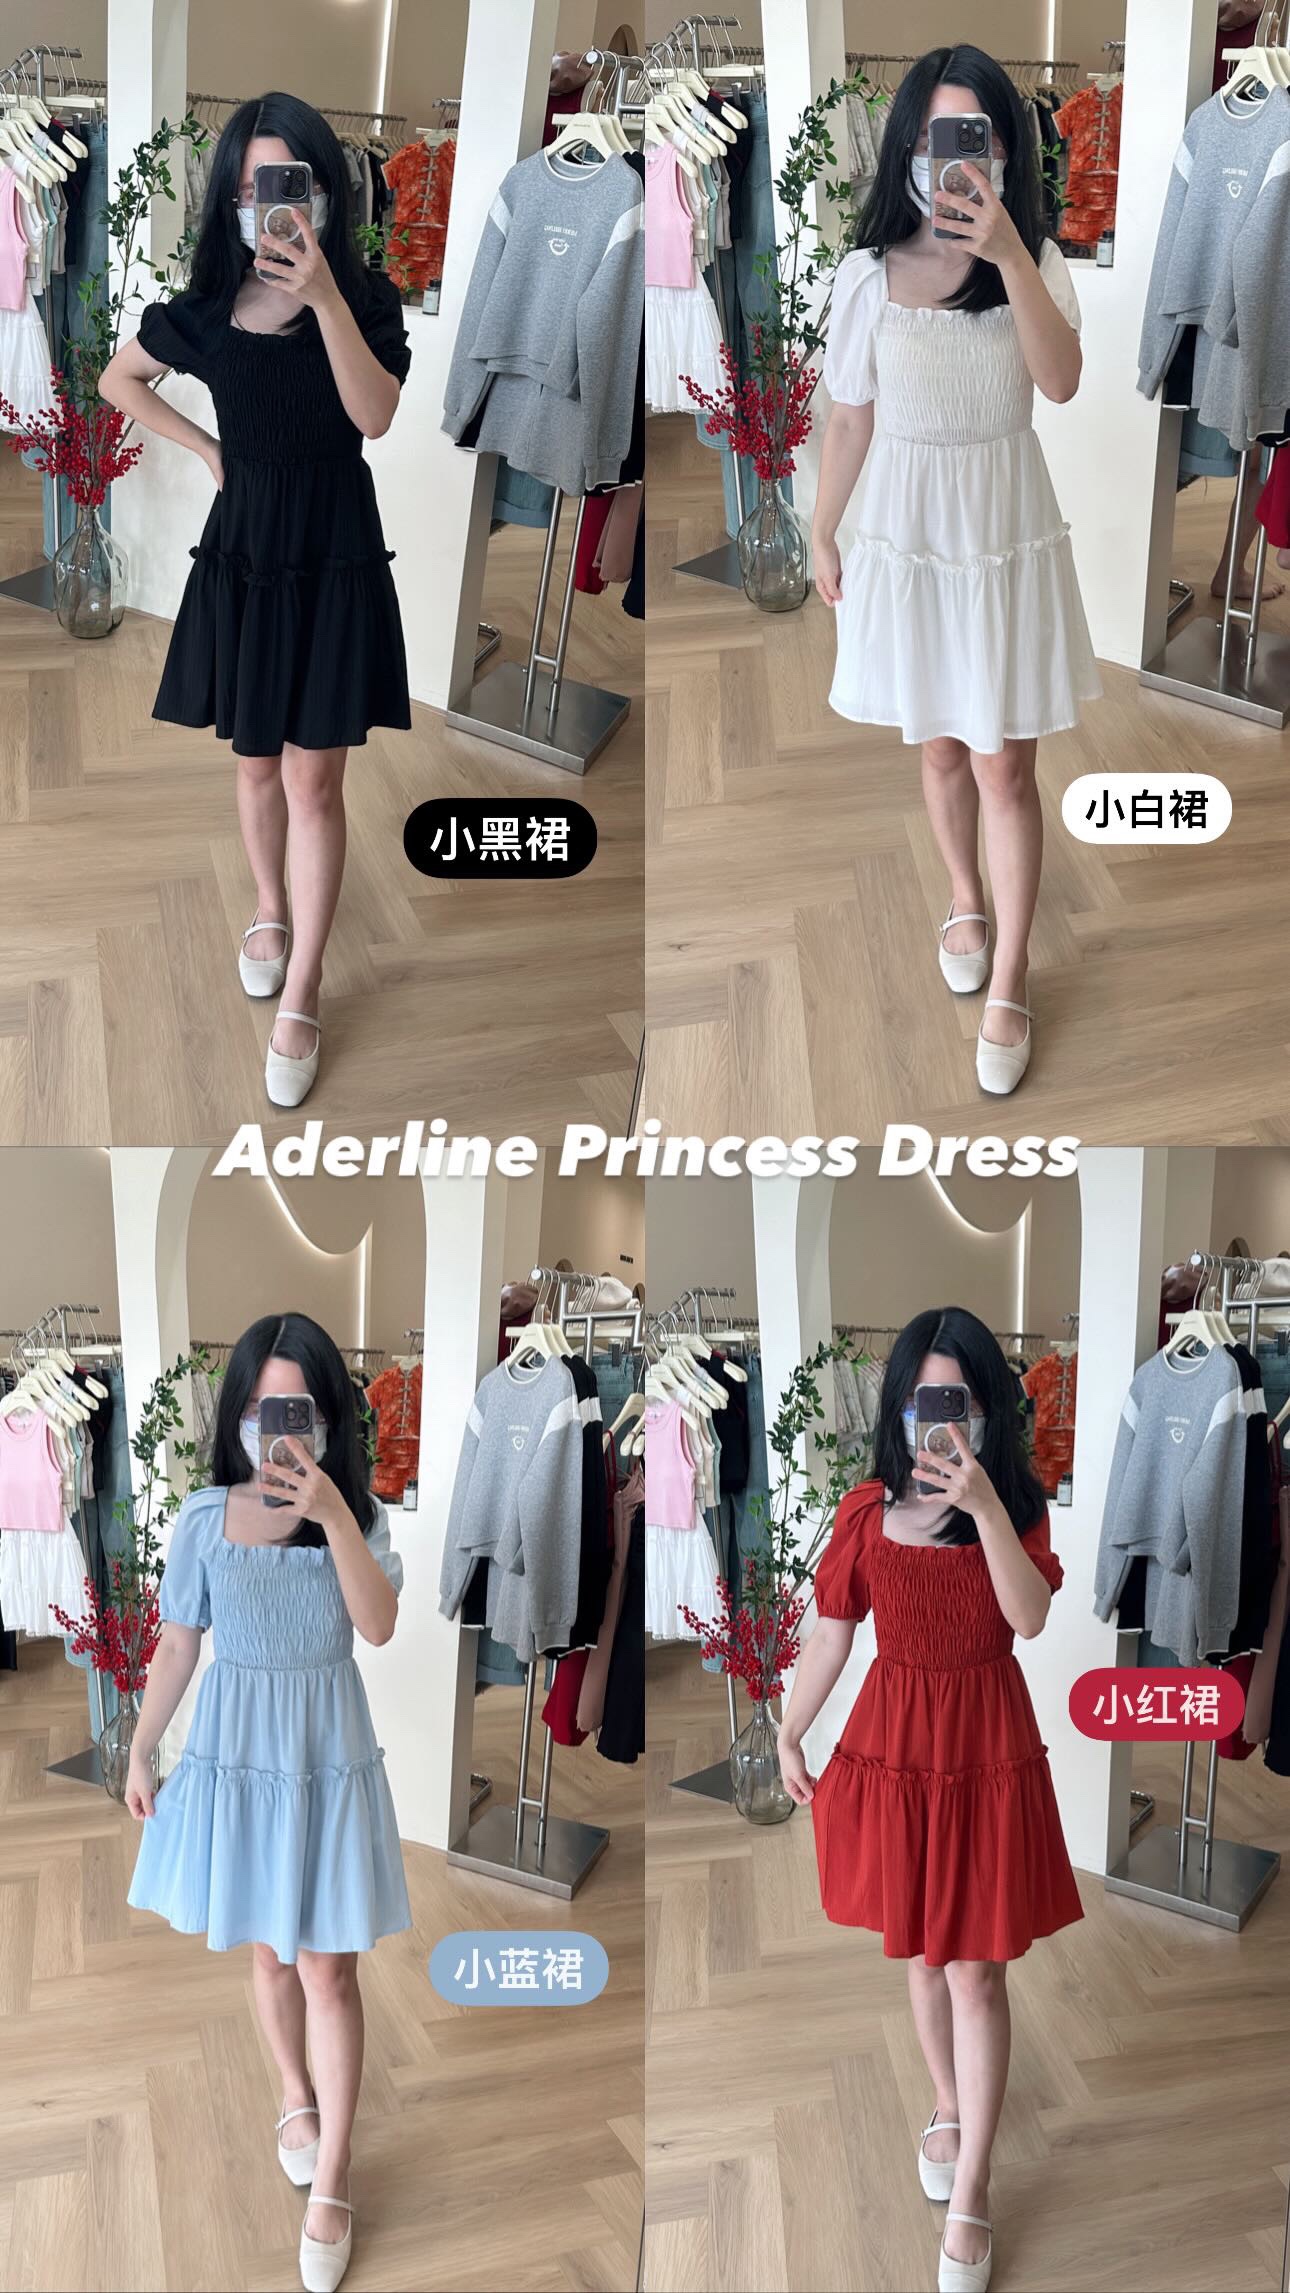 Aderline Princess Dress